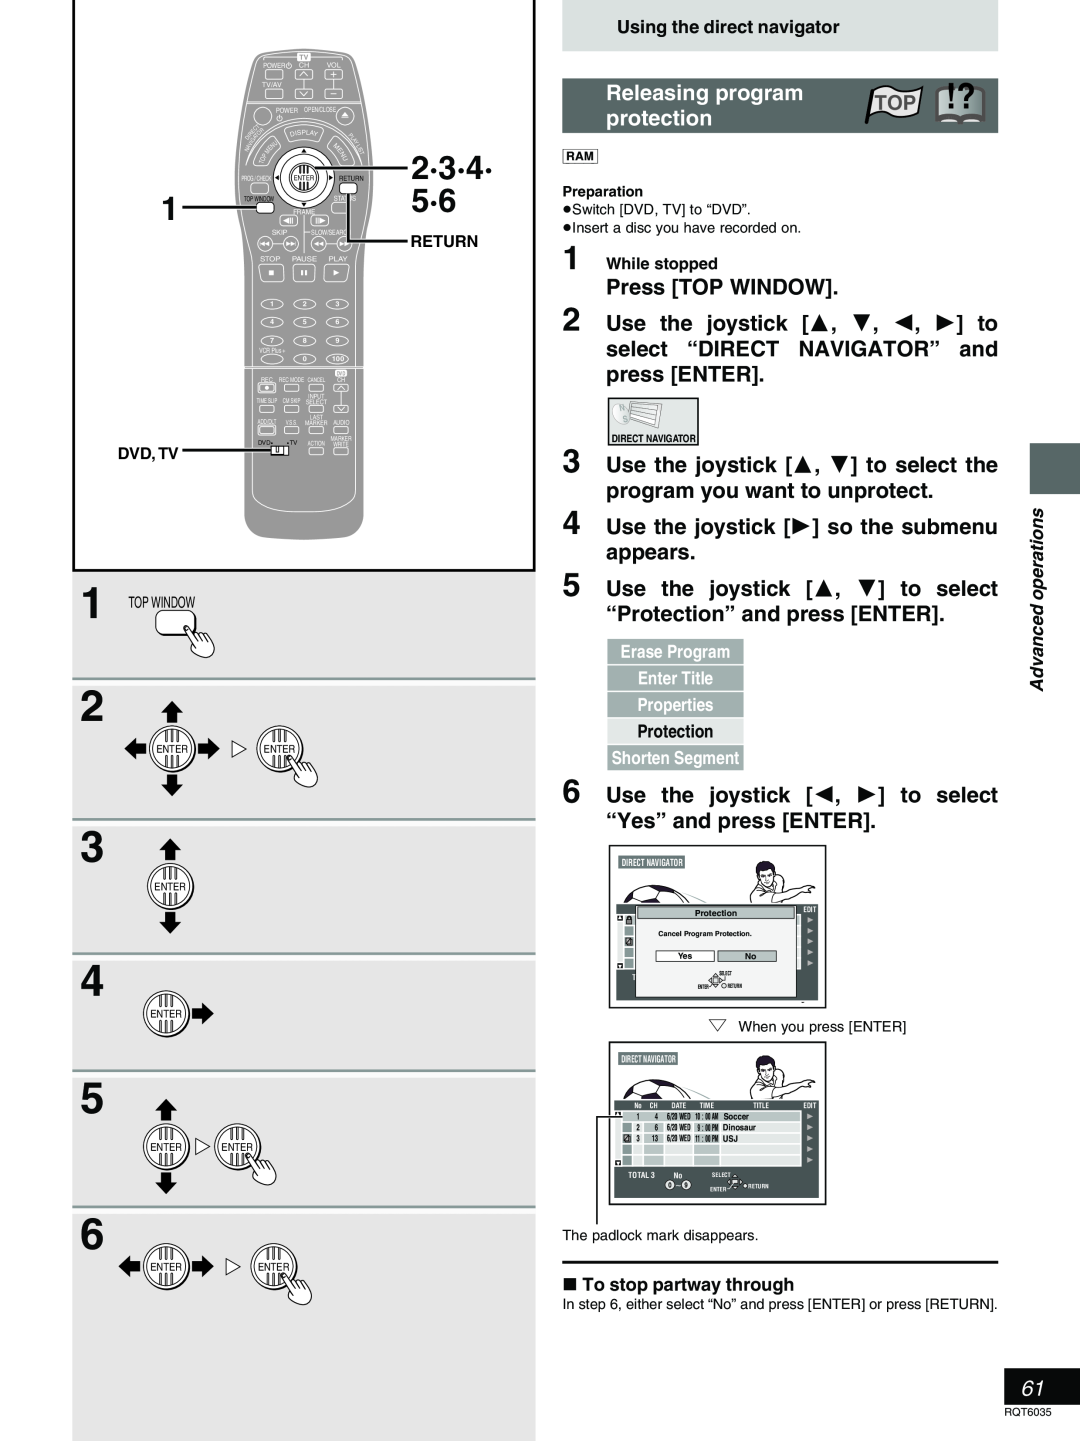 Panasonic DMR-E20 2·3·4· 5·6, Releasing program, protection, Press TOP WINDOW, Use the joystick, 4, 2, 1 to, press ENTER 